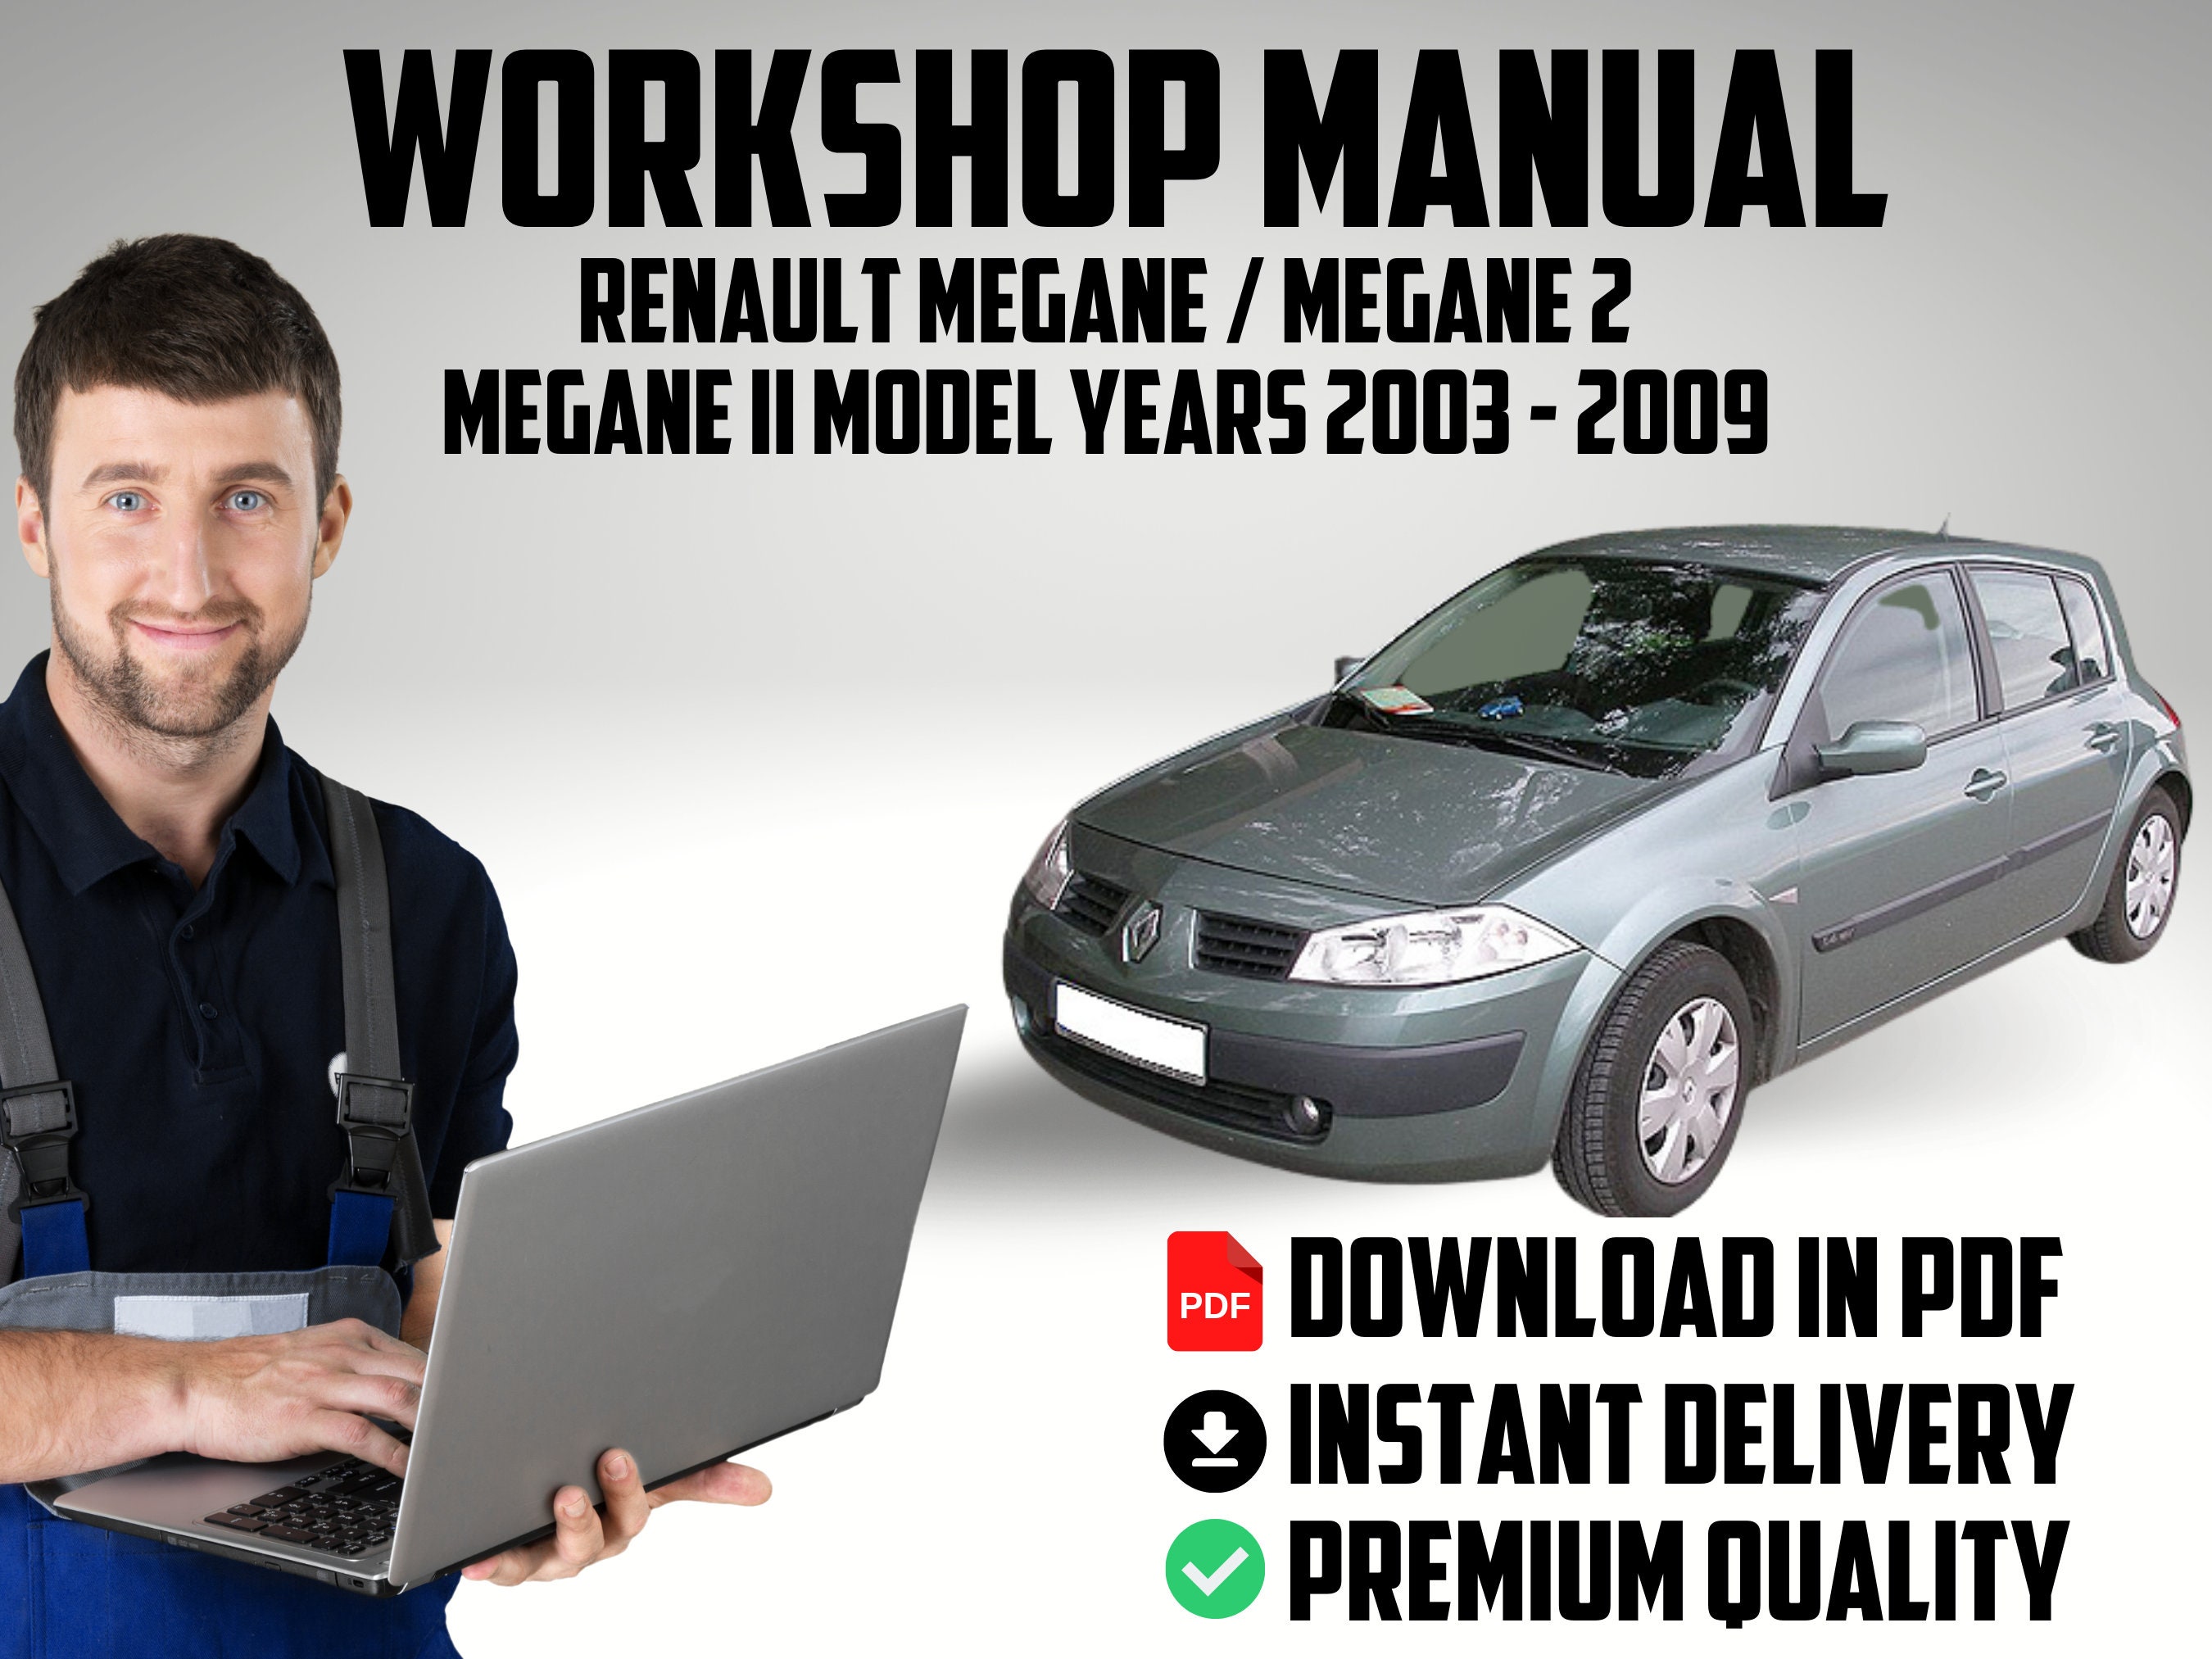 Renault Megane II - Car info guide